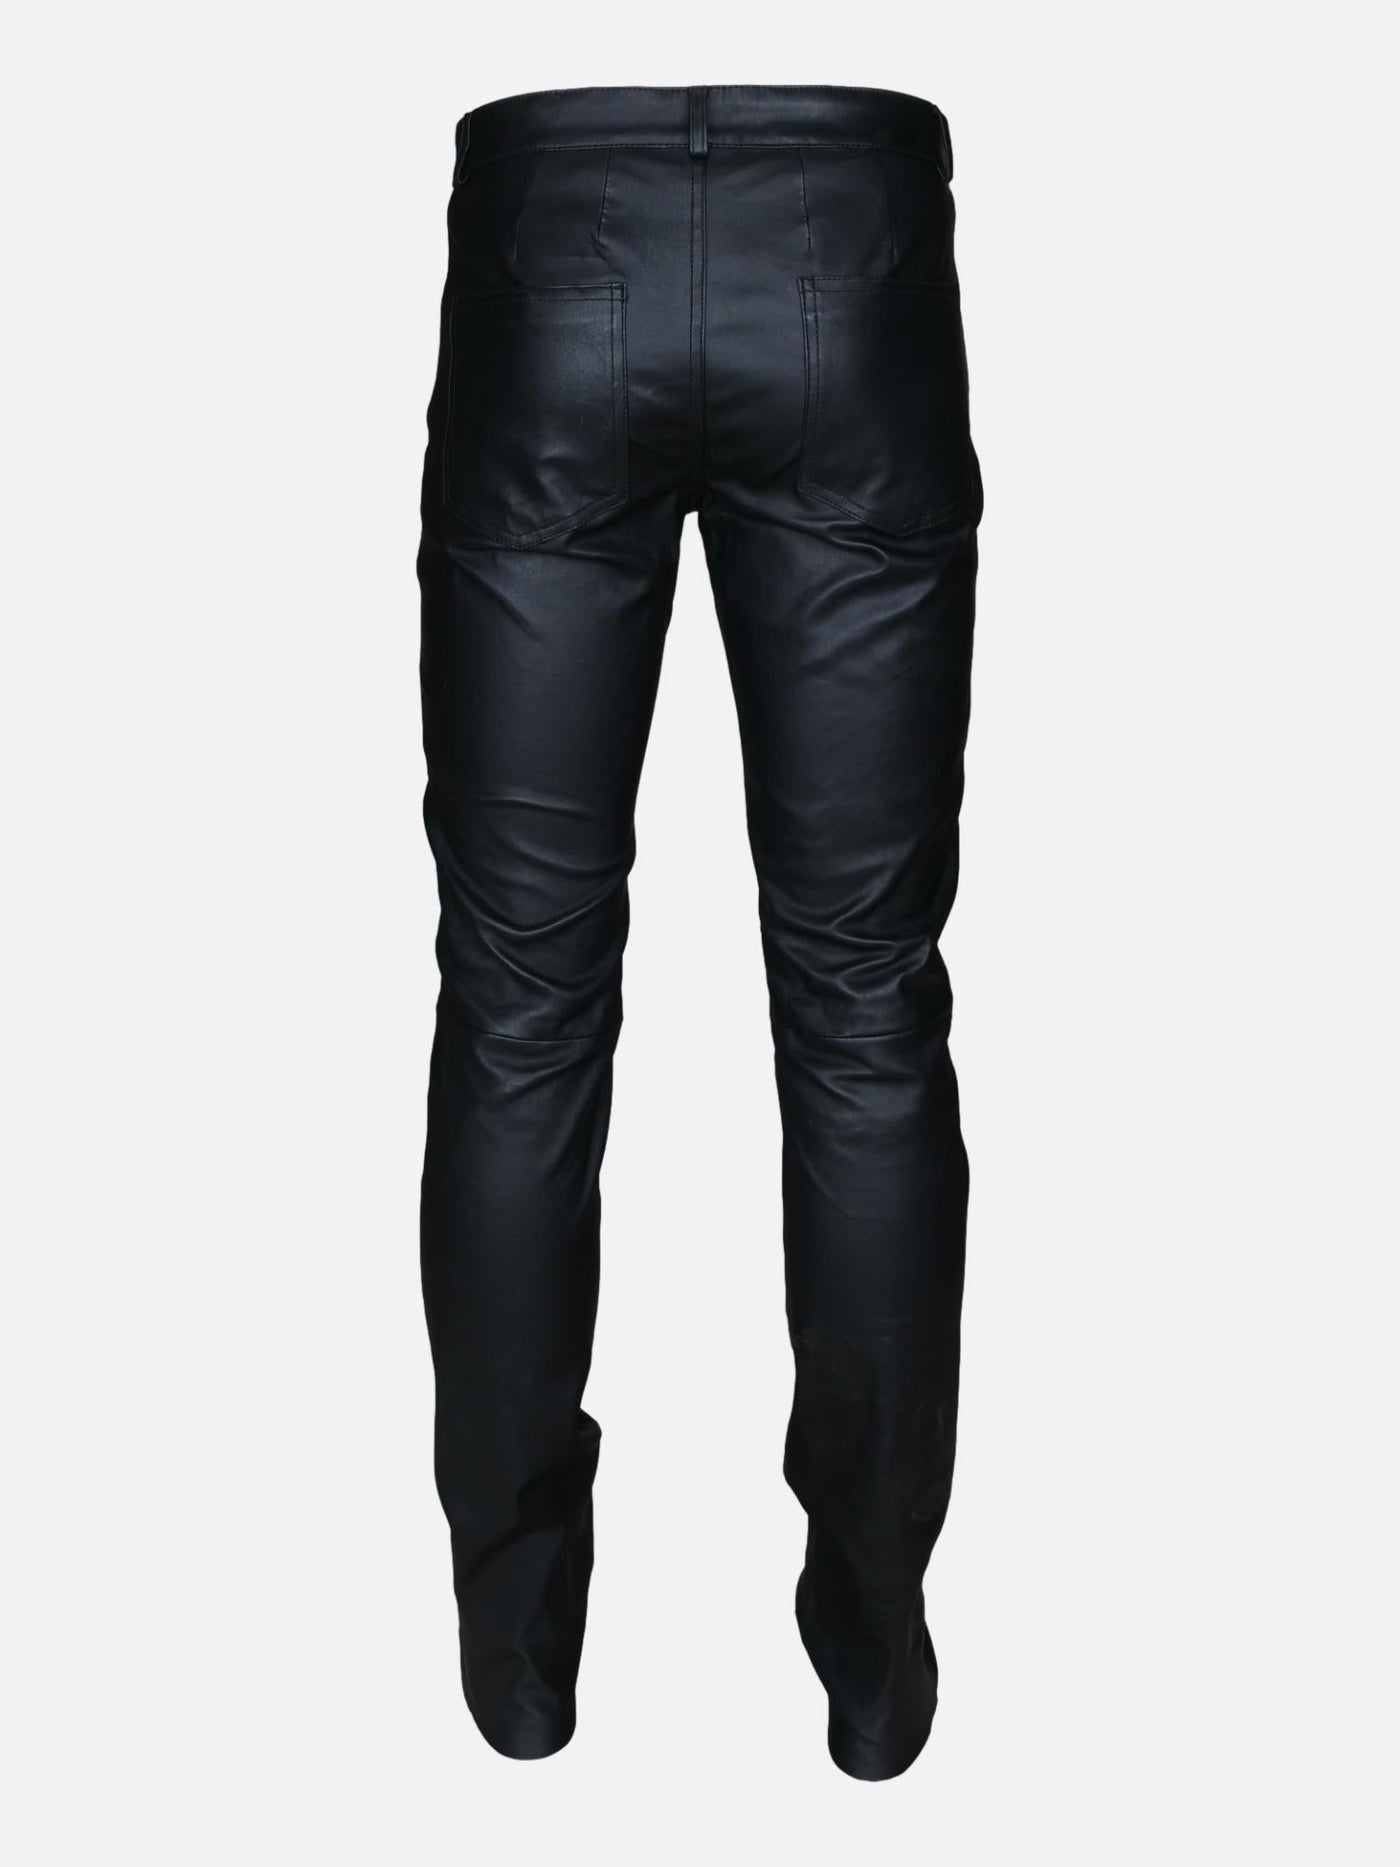 Mens Jeans - Nappa Leather - Man - Black